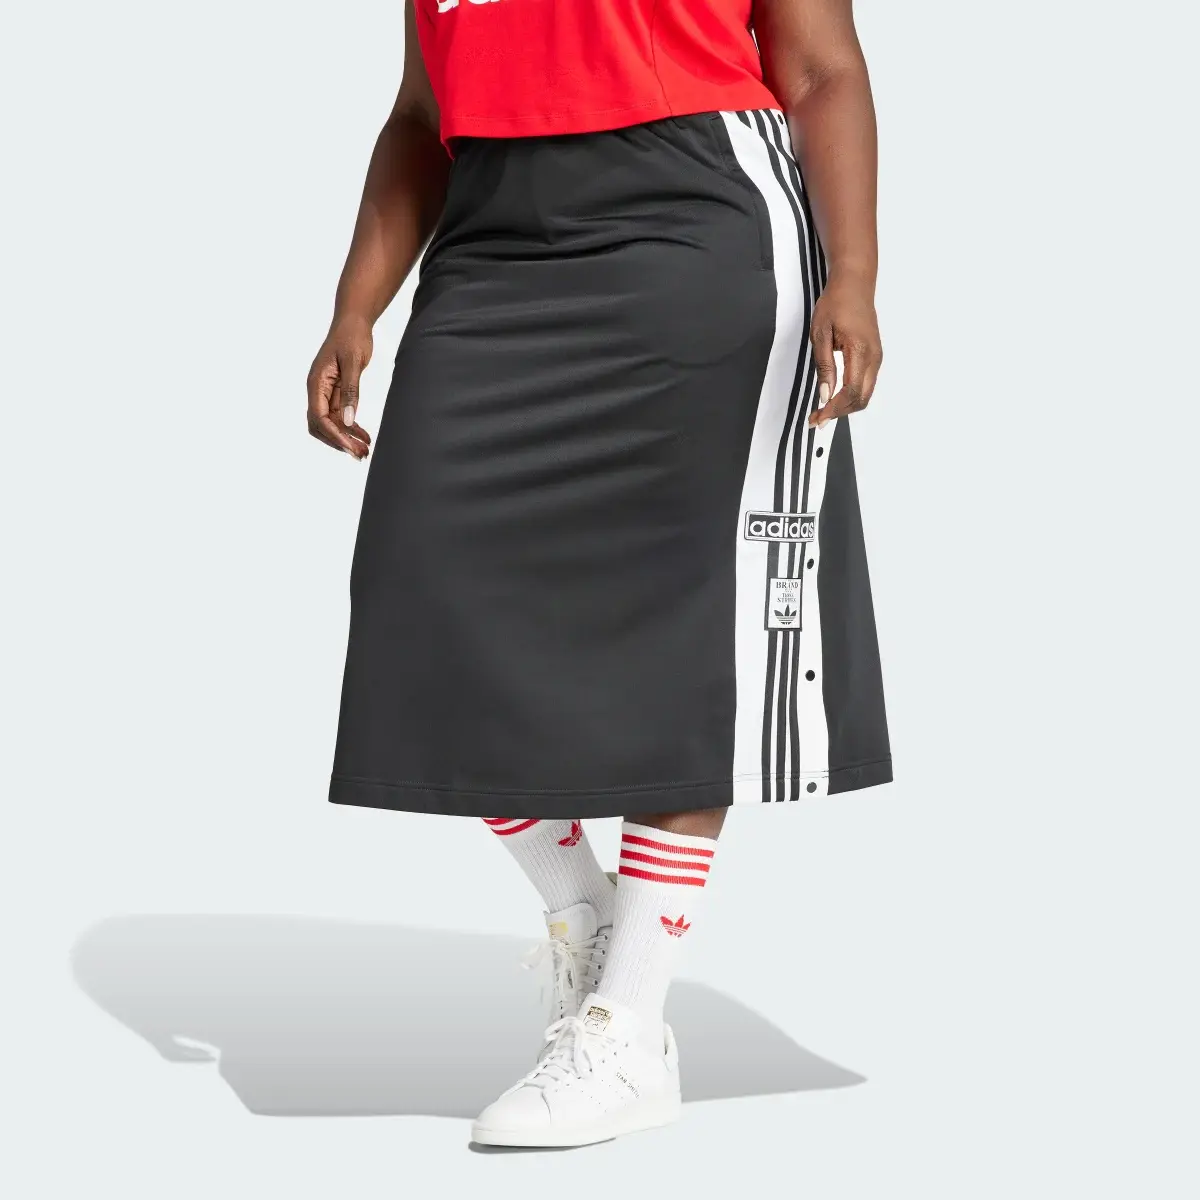 Adidas Adibreak Skirt (Plus Size). 1